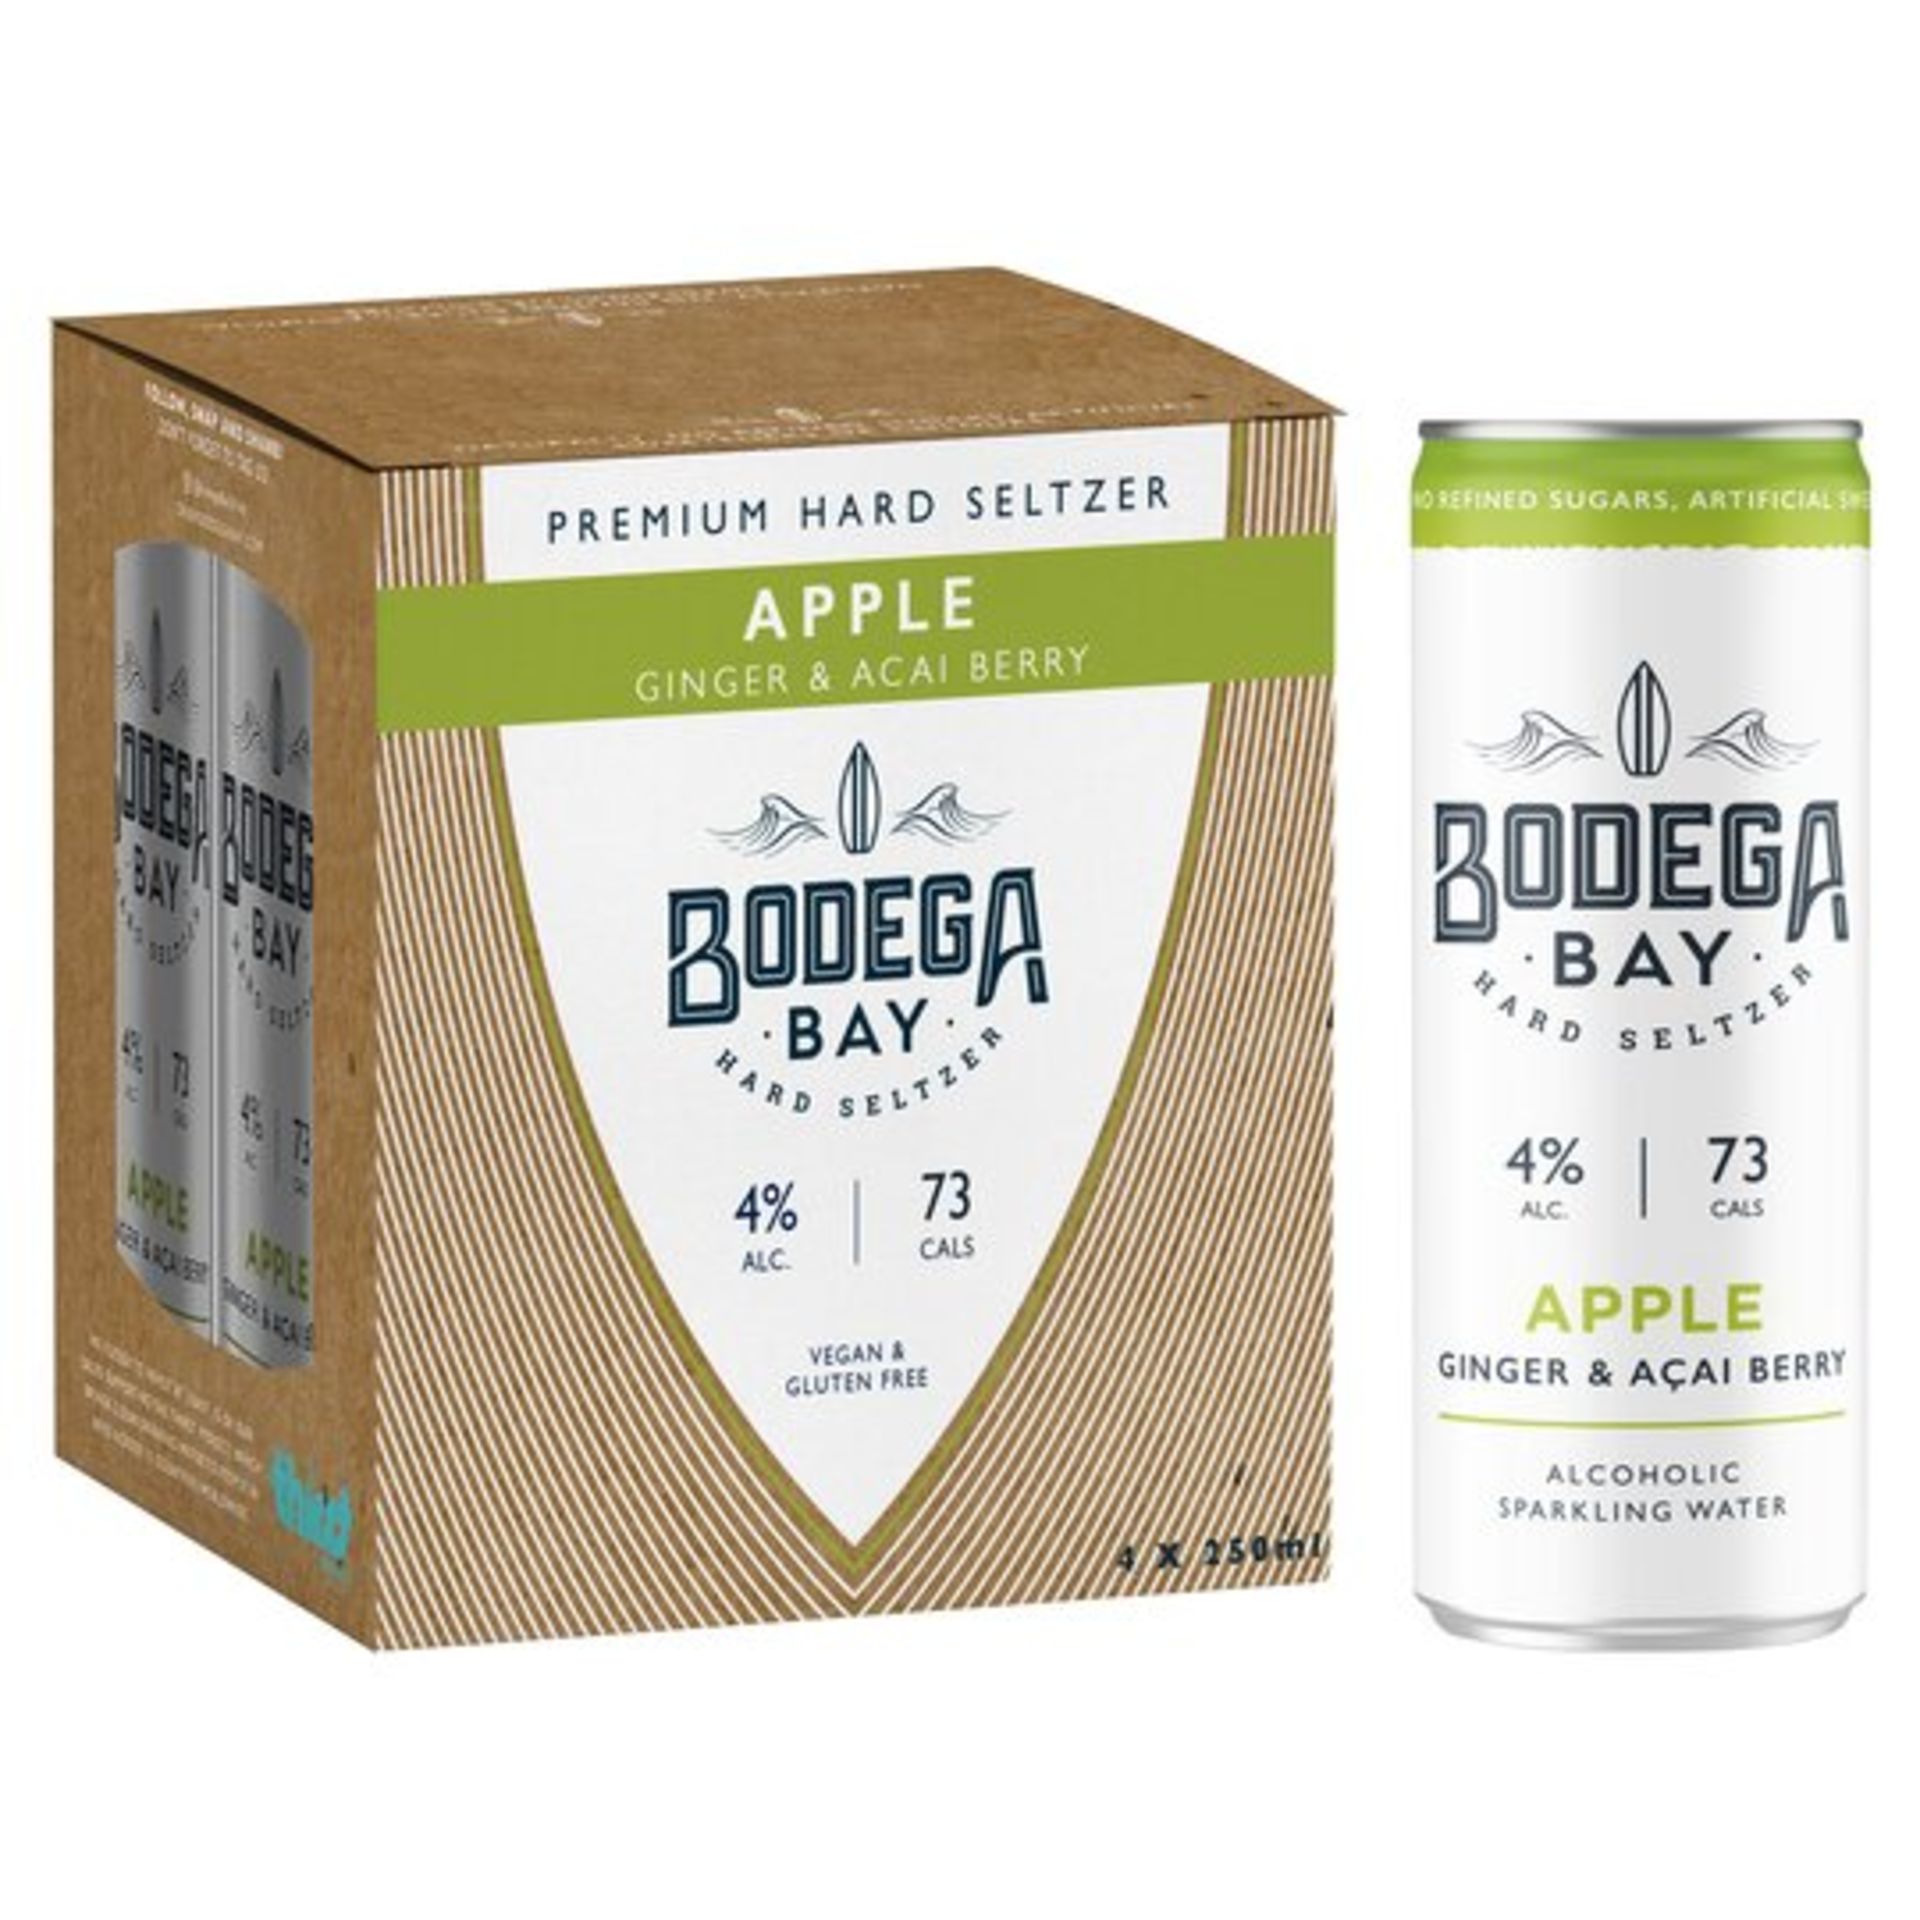 24 x Bodega Bay Hard Seltzer 250ml Alcoholic Sparkling Water Drinks - Apple Ginger & Acai Berry - Image 9 of 11